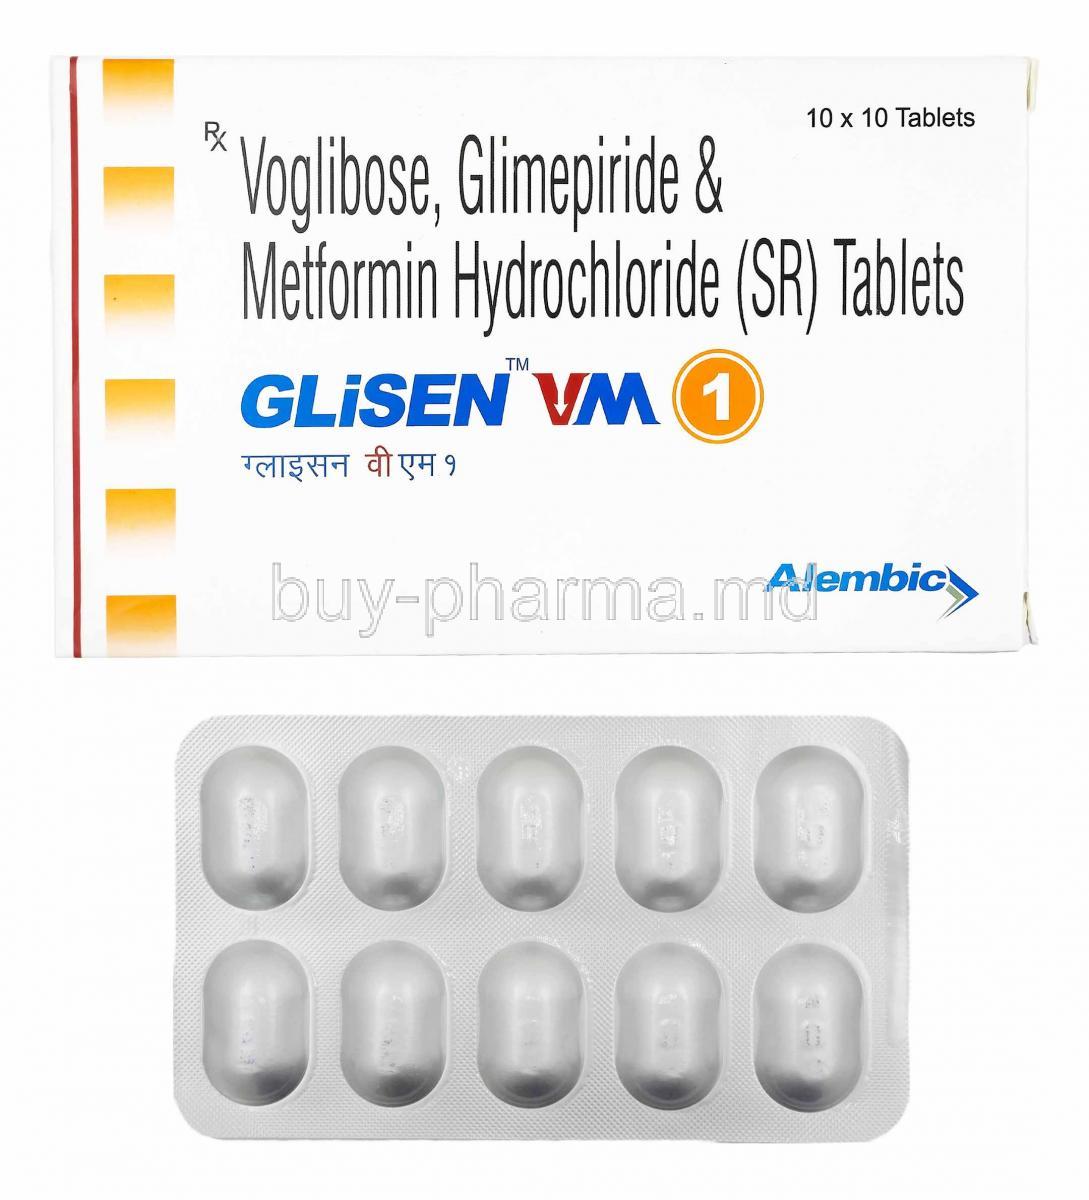 Glisen VM, Glimepiride, Metformin and Voglibose 1mg box and tablets